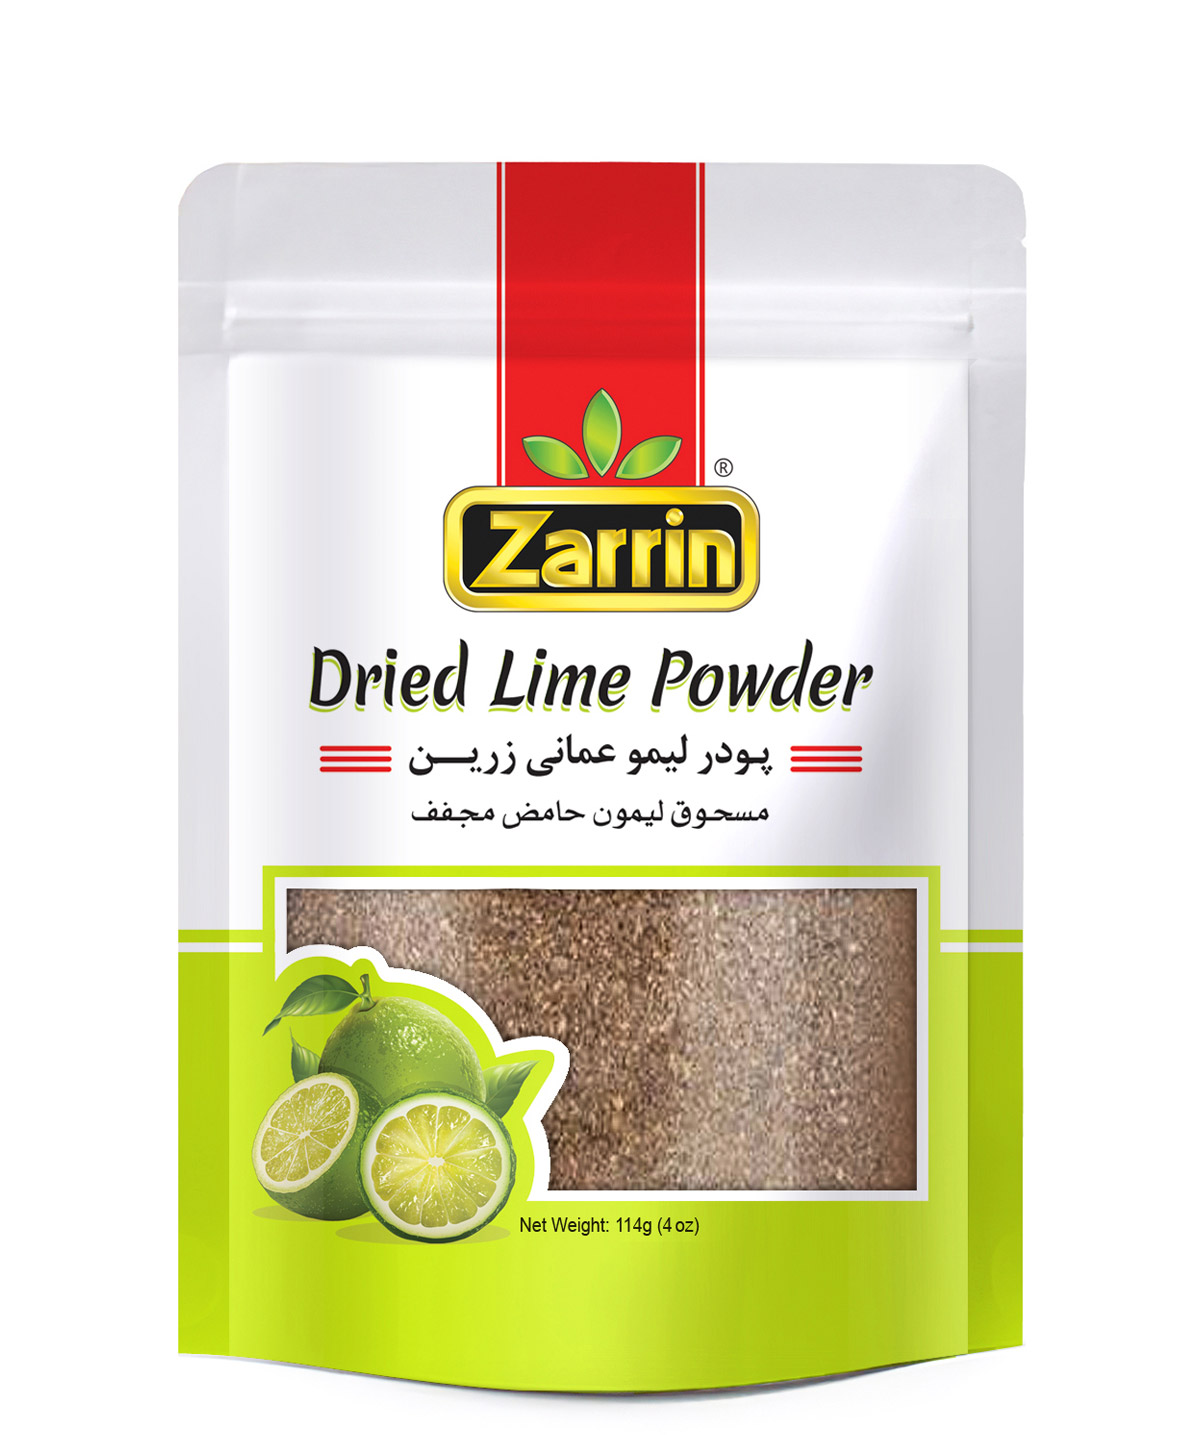 Zarrin Dried Lime Powder